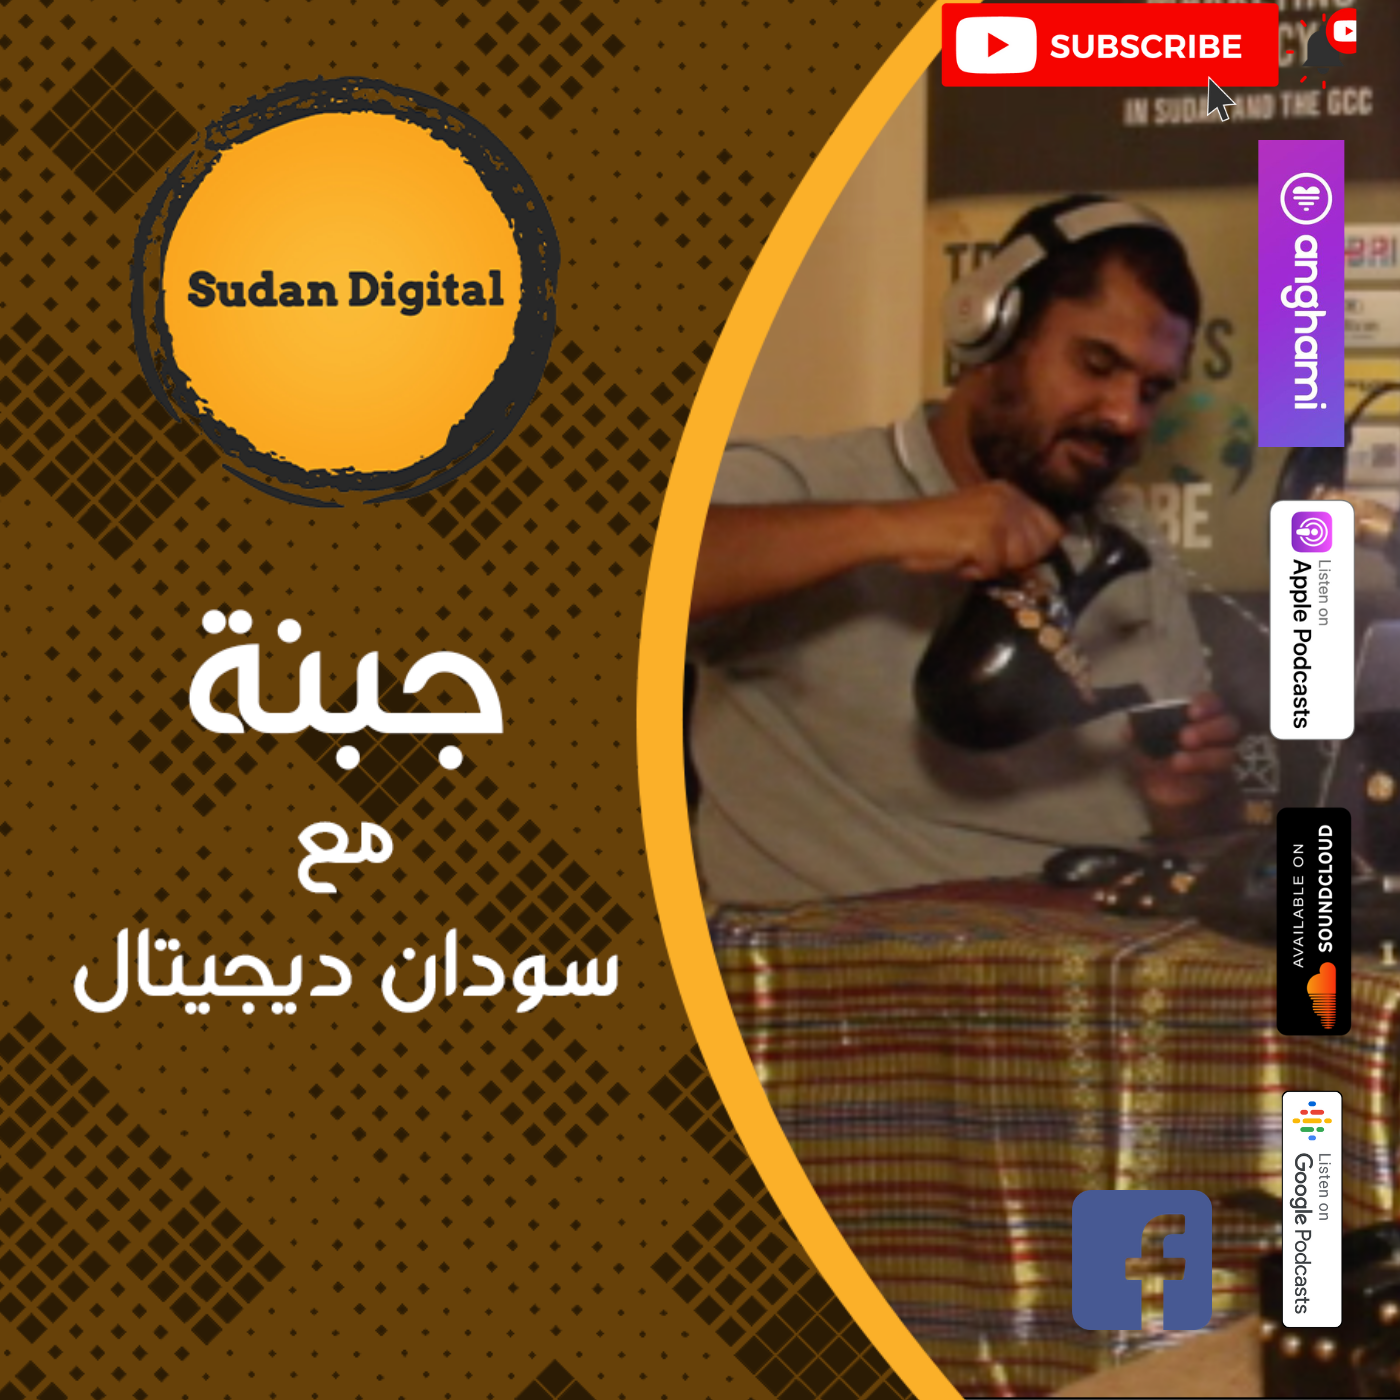 Episode 1 - Jabana With Sudan Digital - How to Get into marketing